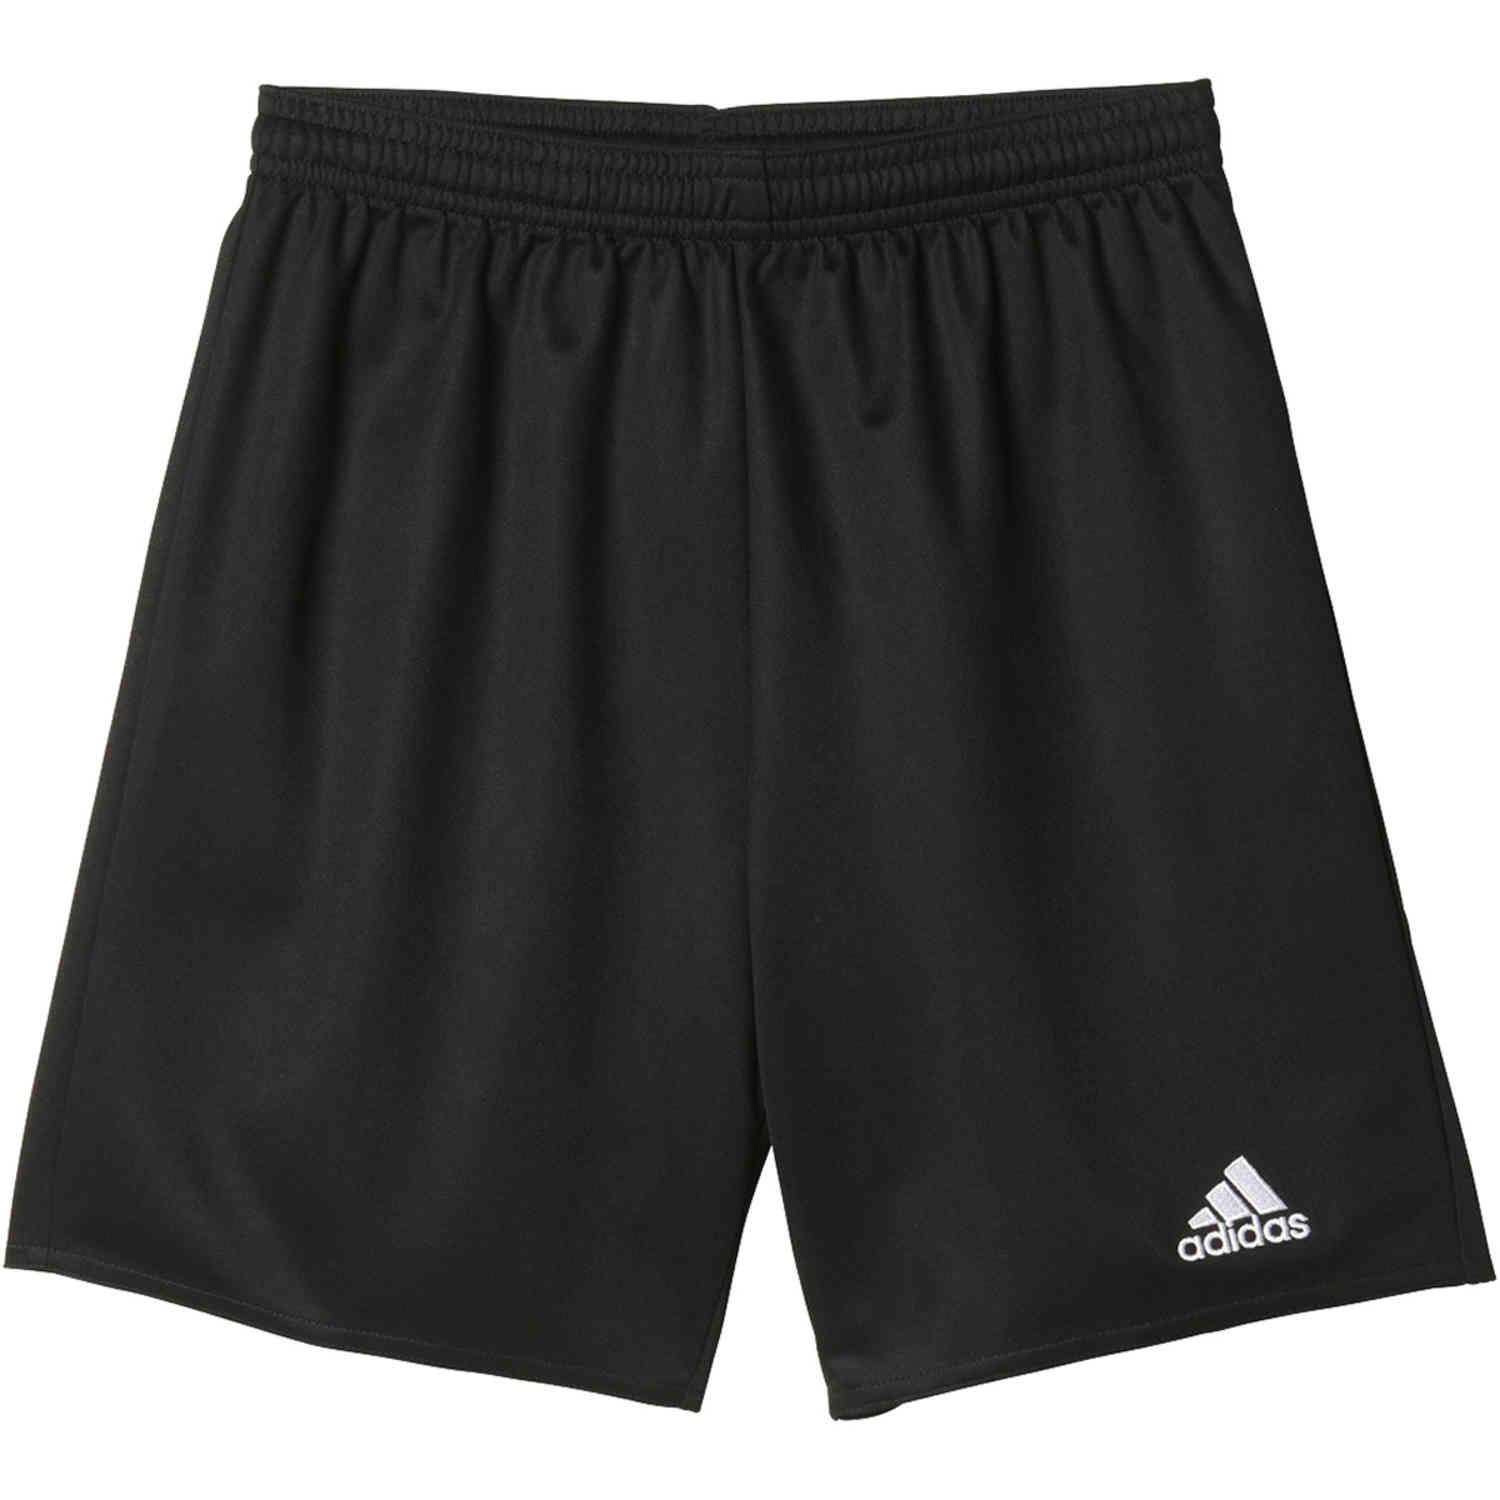 Kids adidas Parma 16 Shorts - Black - SoccerPro